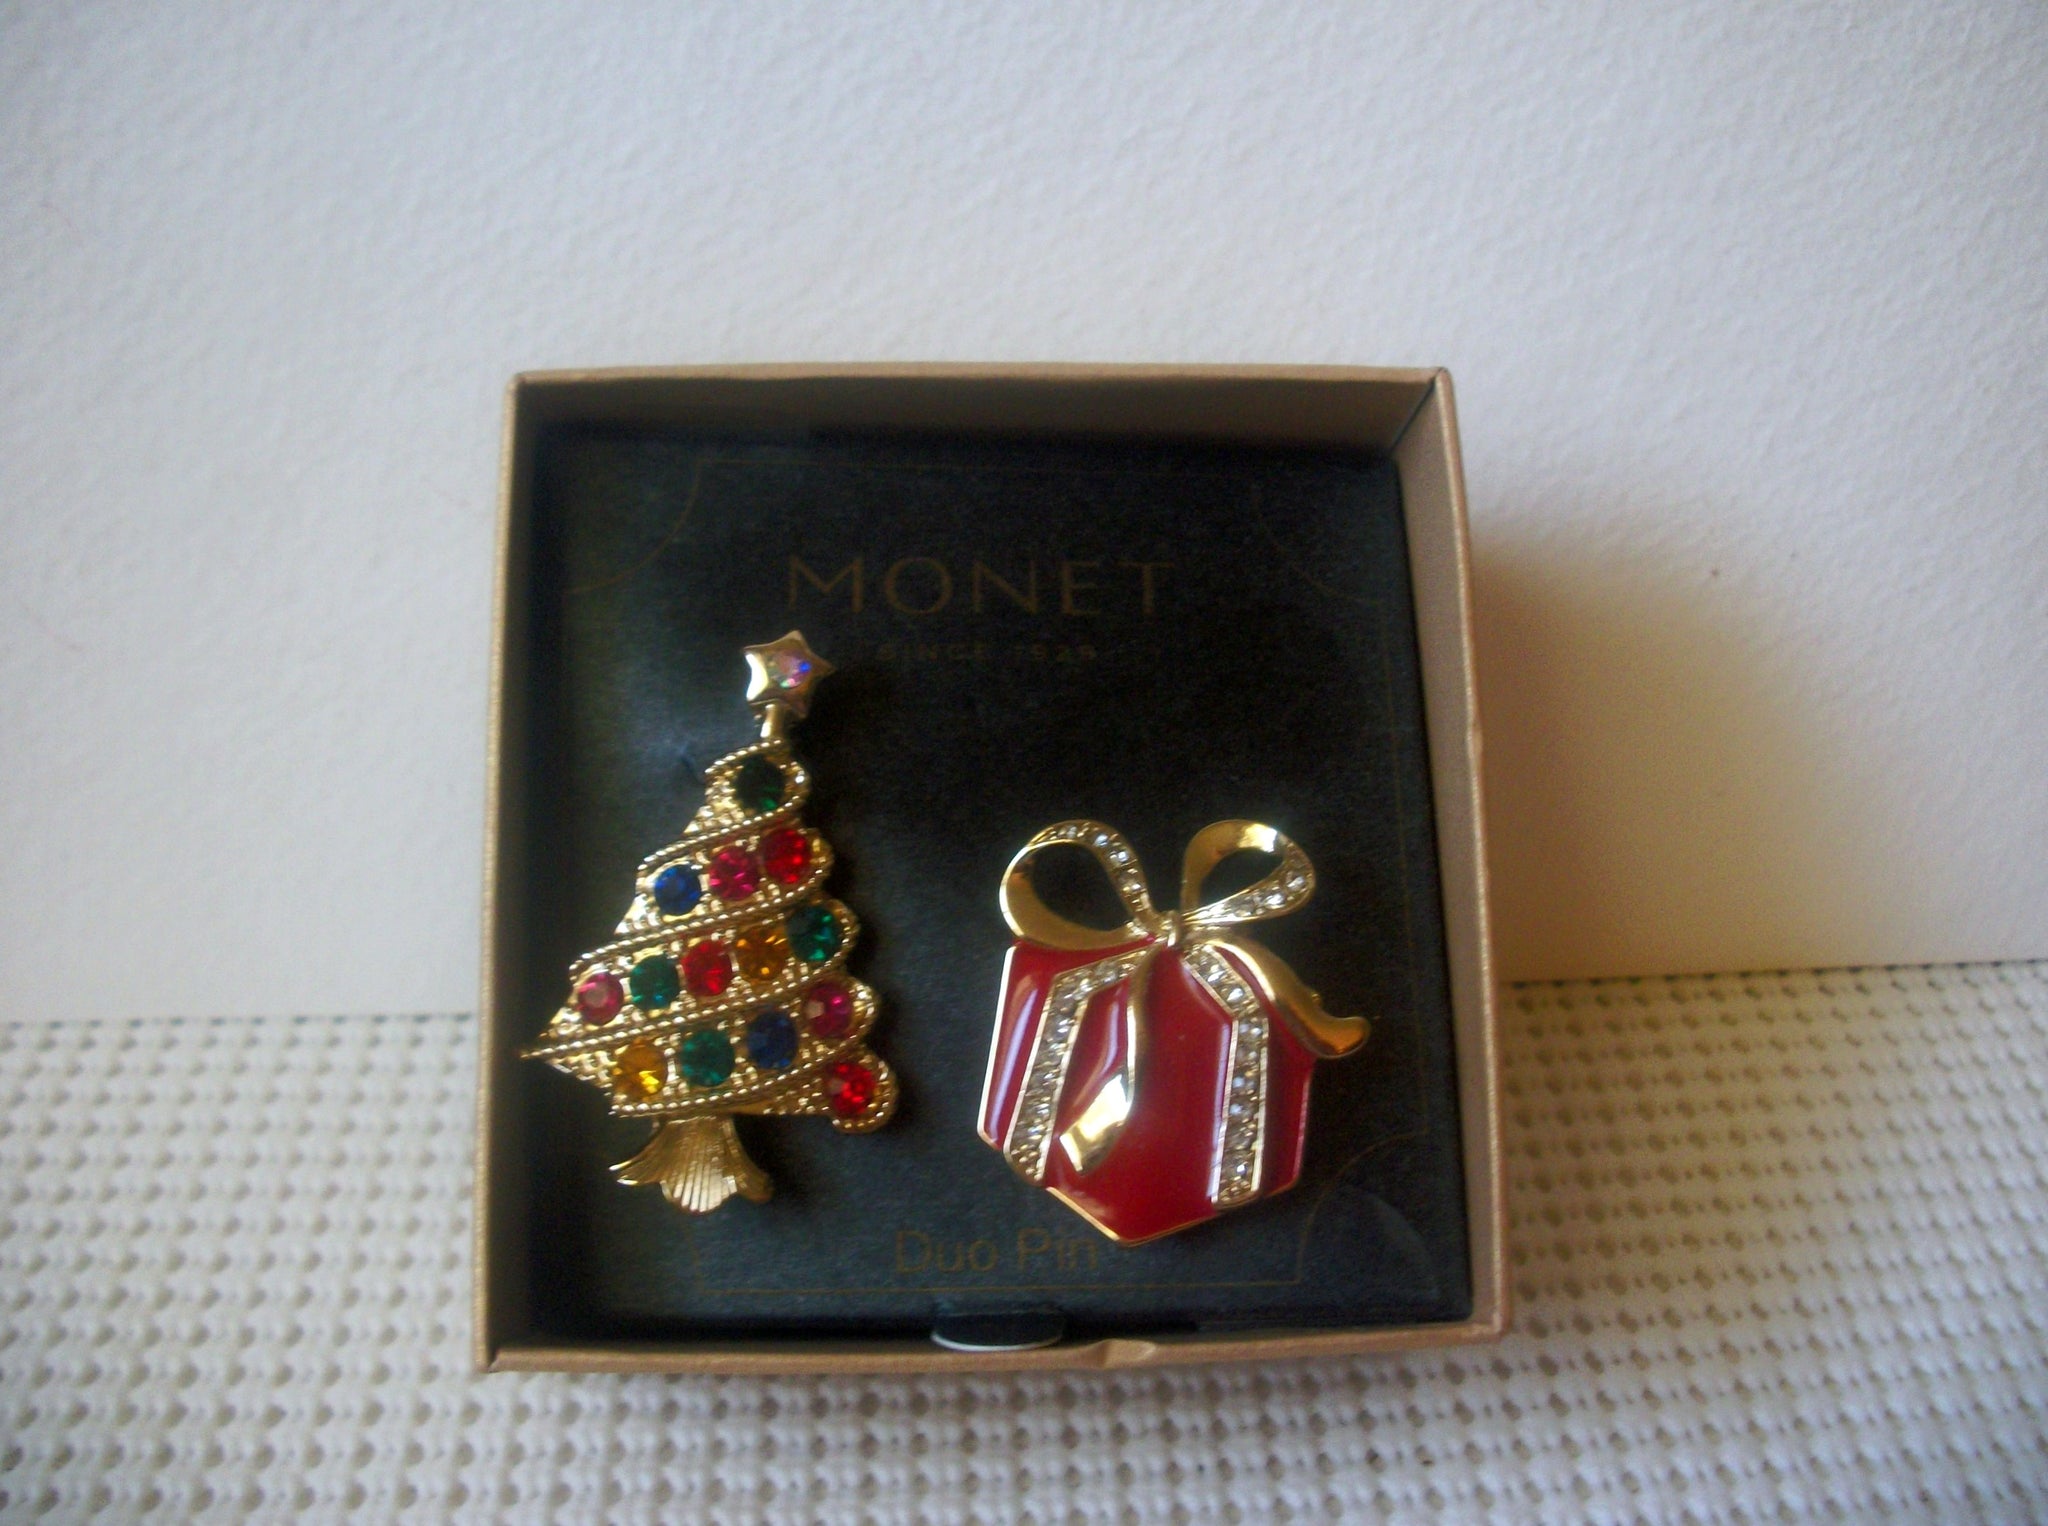 Vintage Brooch Pin, MONET, Christmas Set, Tree and Presents, Colorful Rhinestones, Set of 2, 022021